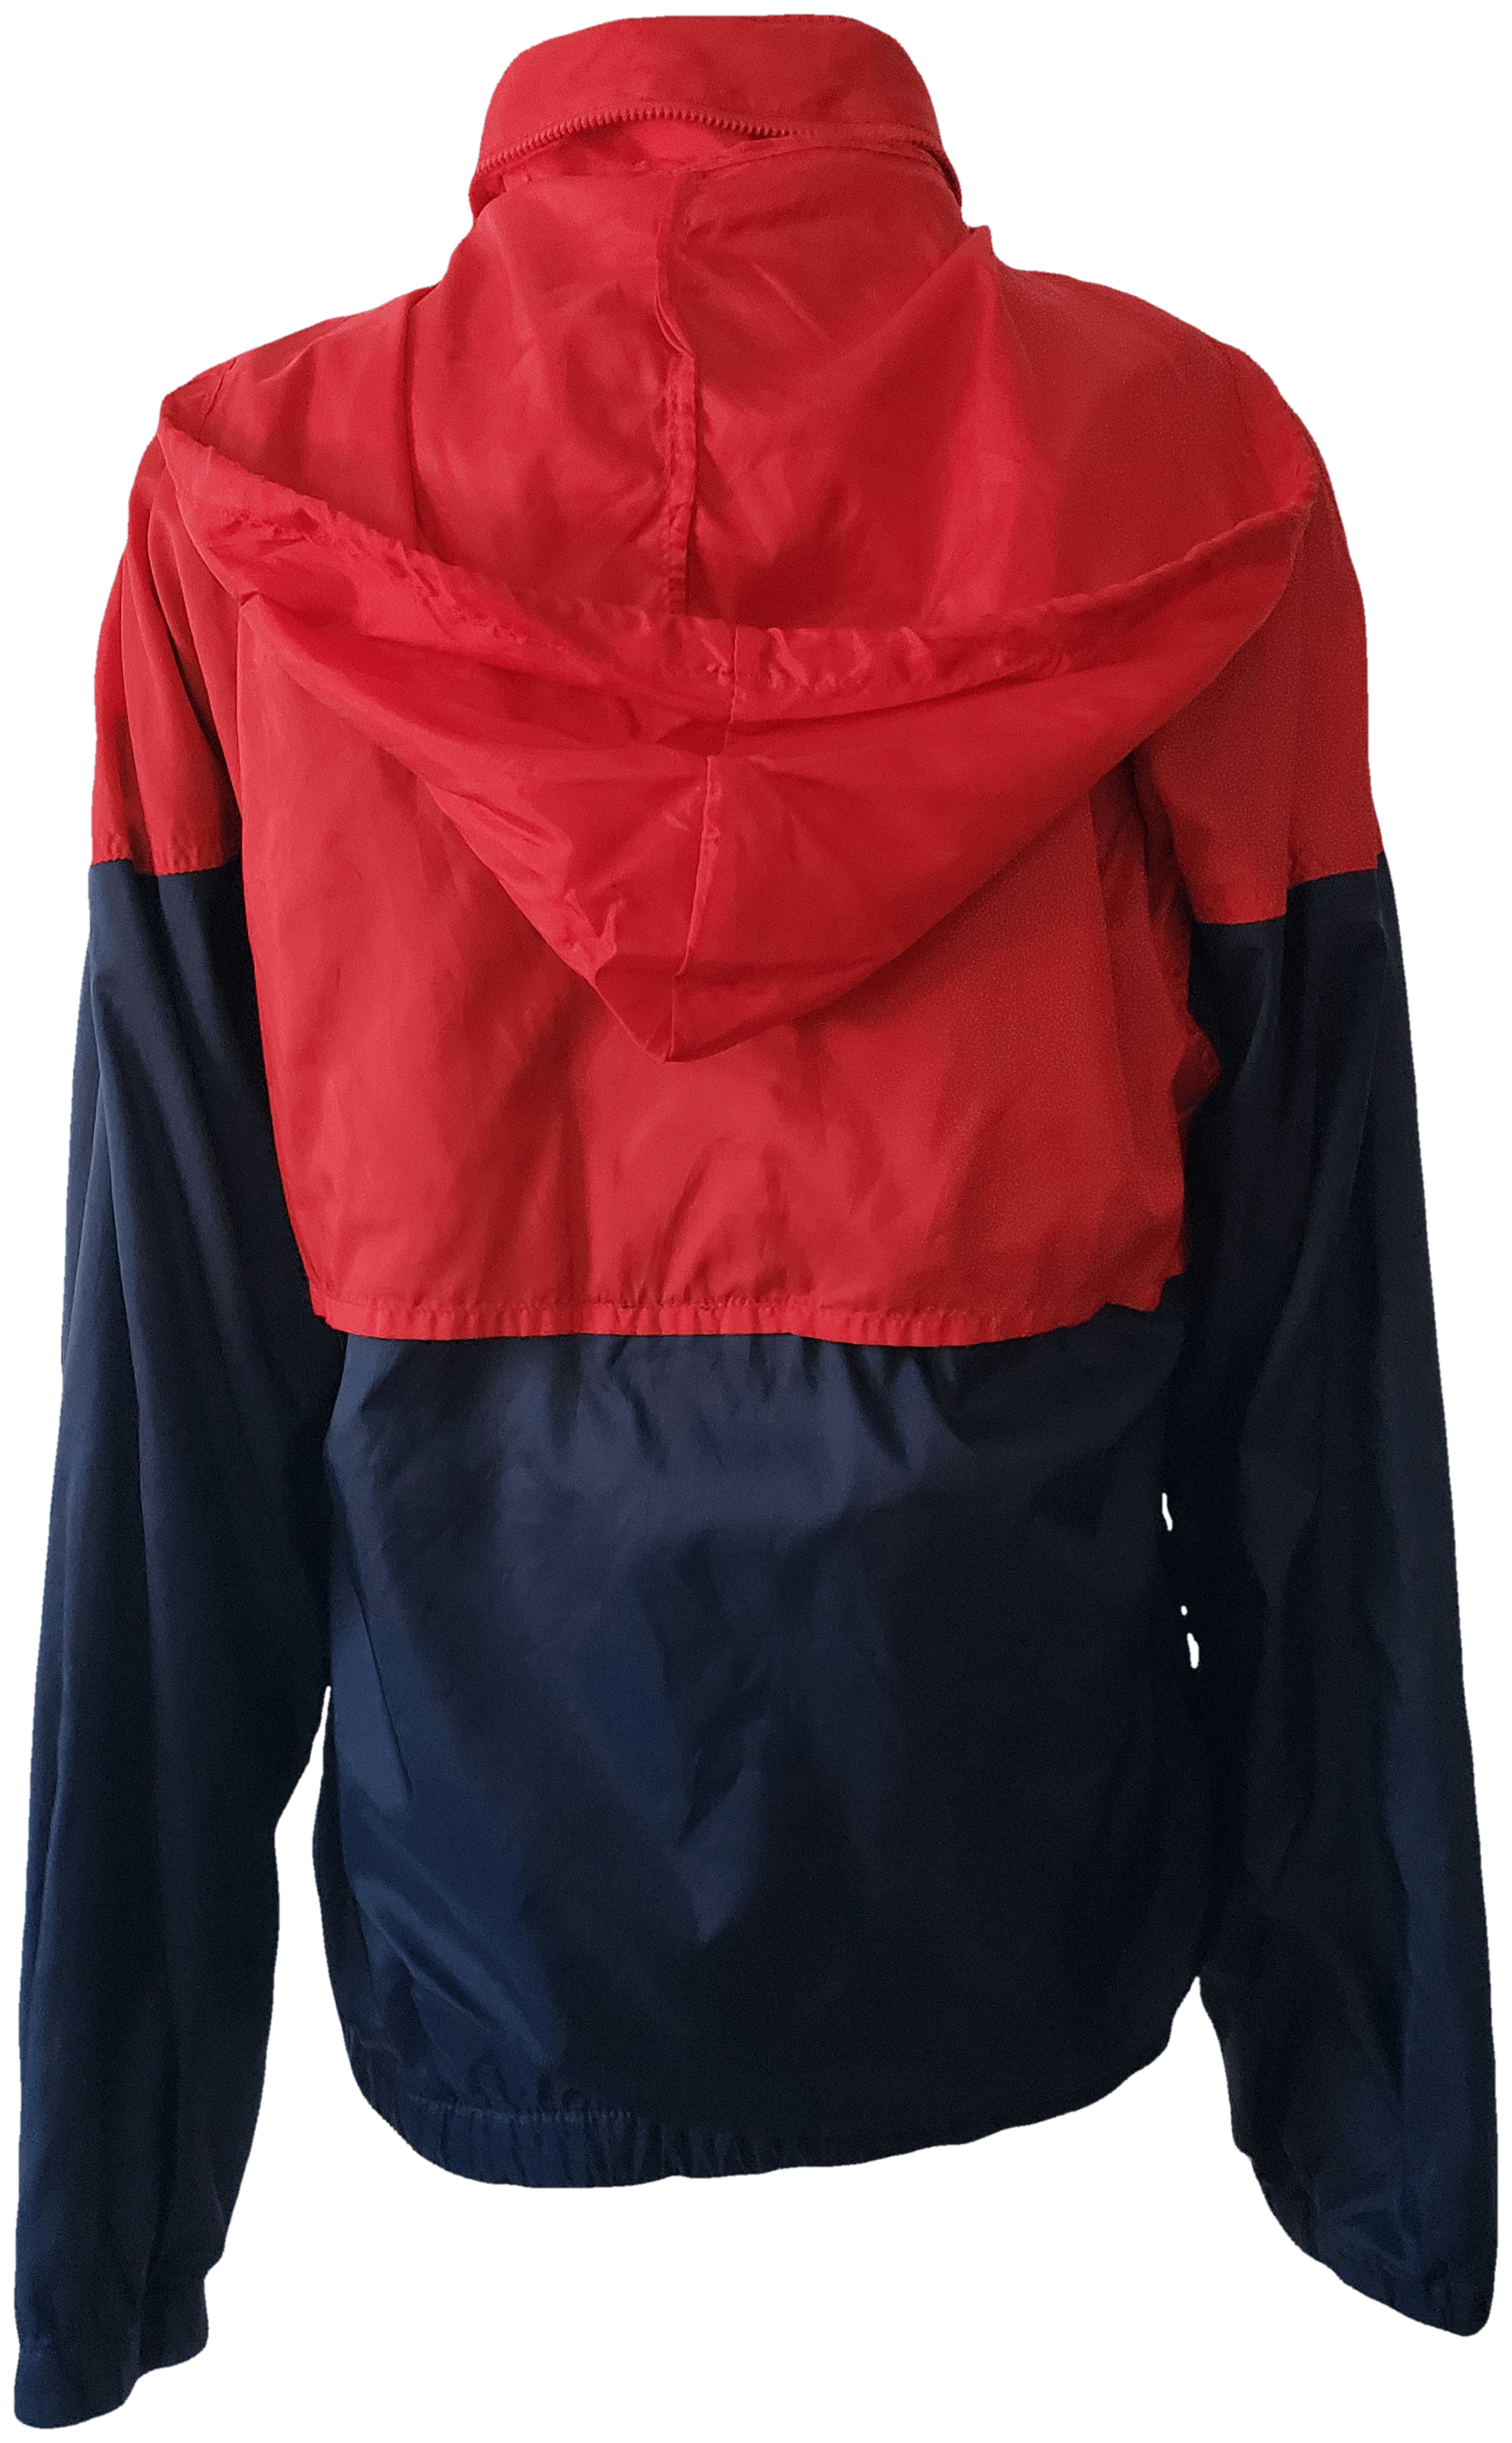 adidas blue red white jacket